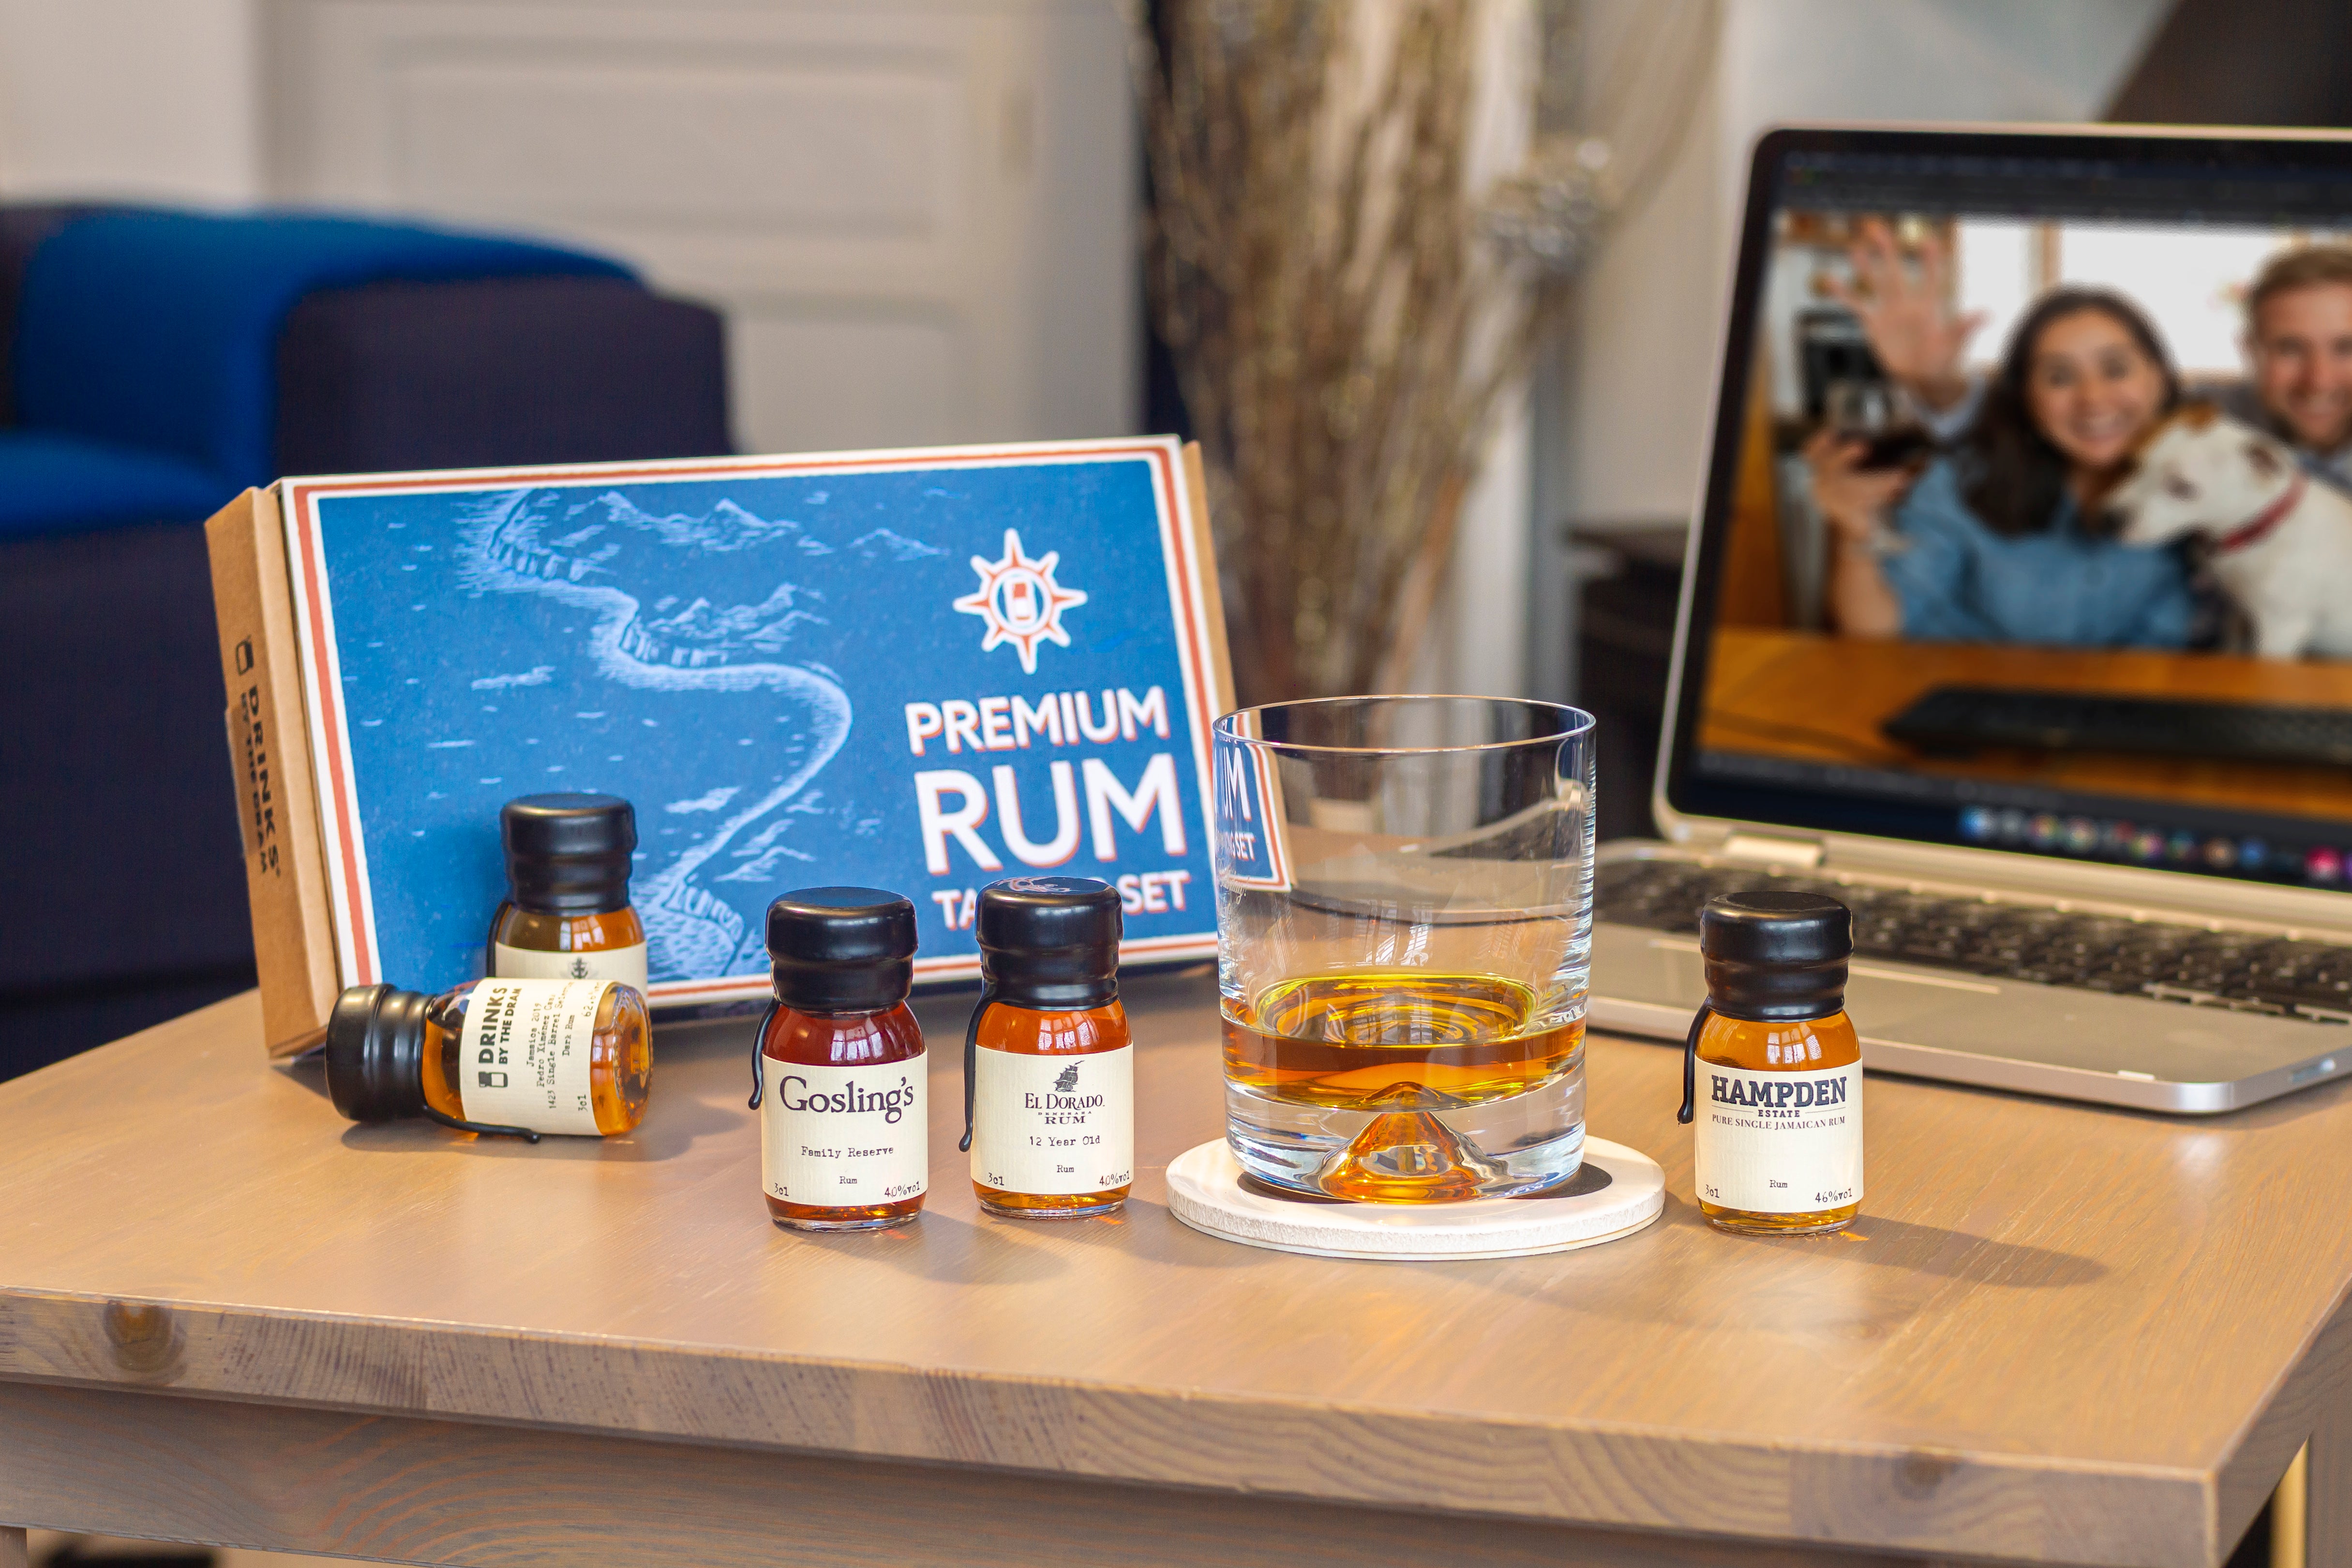 Premium Rum Tasting The By Dram Set Drinks –